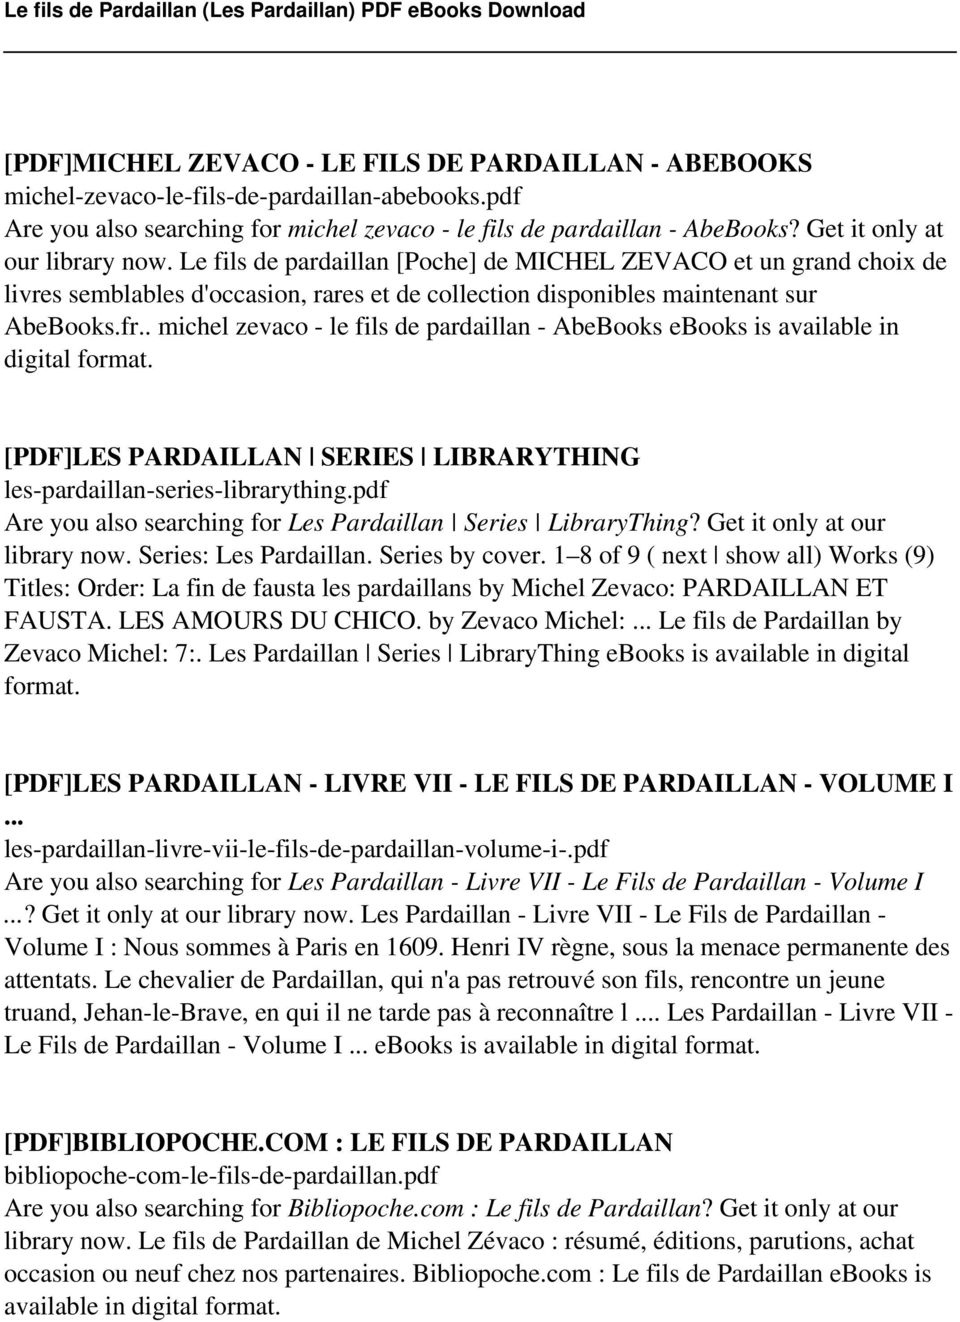 . michel zevaco - le fils de pardaillan - AbeBooks ebooks is available in digital [PDF]LES PARDAILLAN SERIES LIBRARYTHING les-pardaillan-series-librarything.